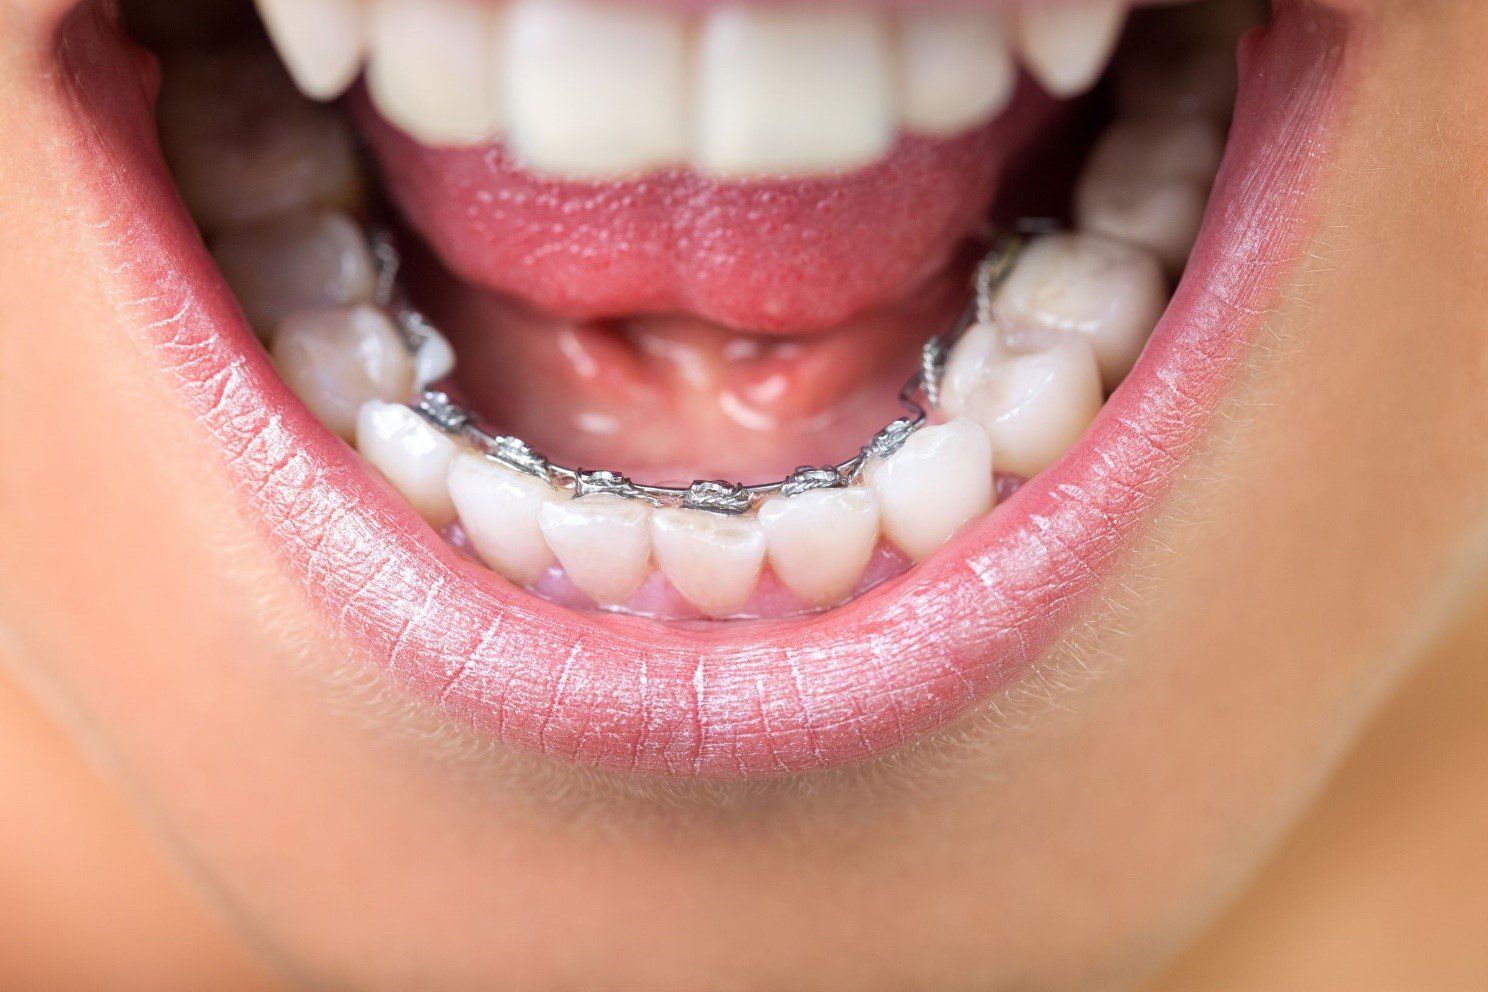 Don't Want Noticeable Orthodontics? Consider Lingual Braces